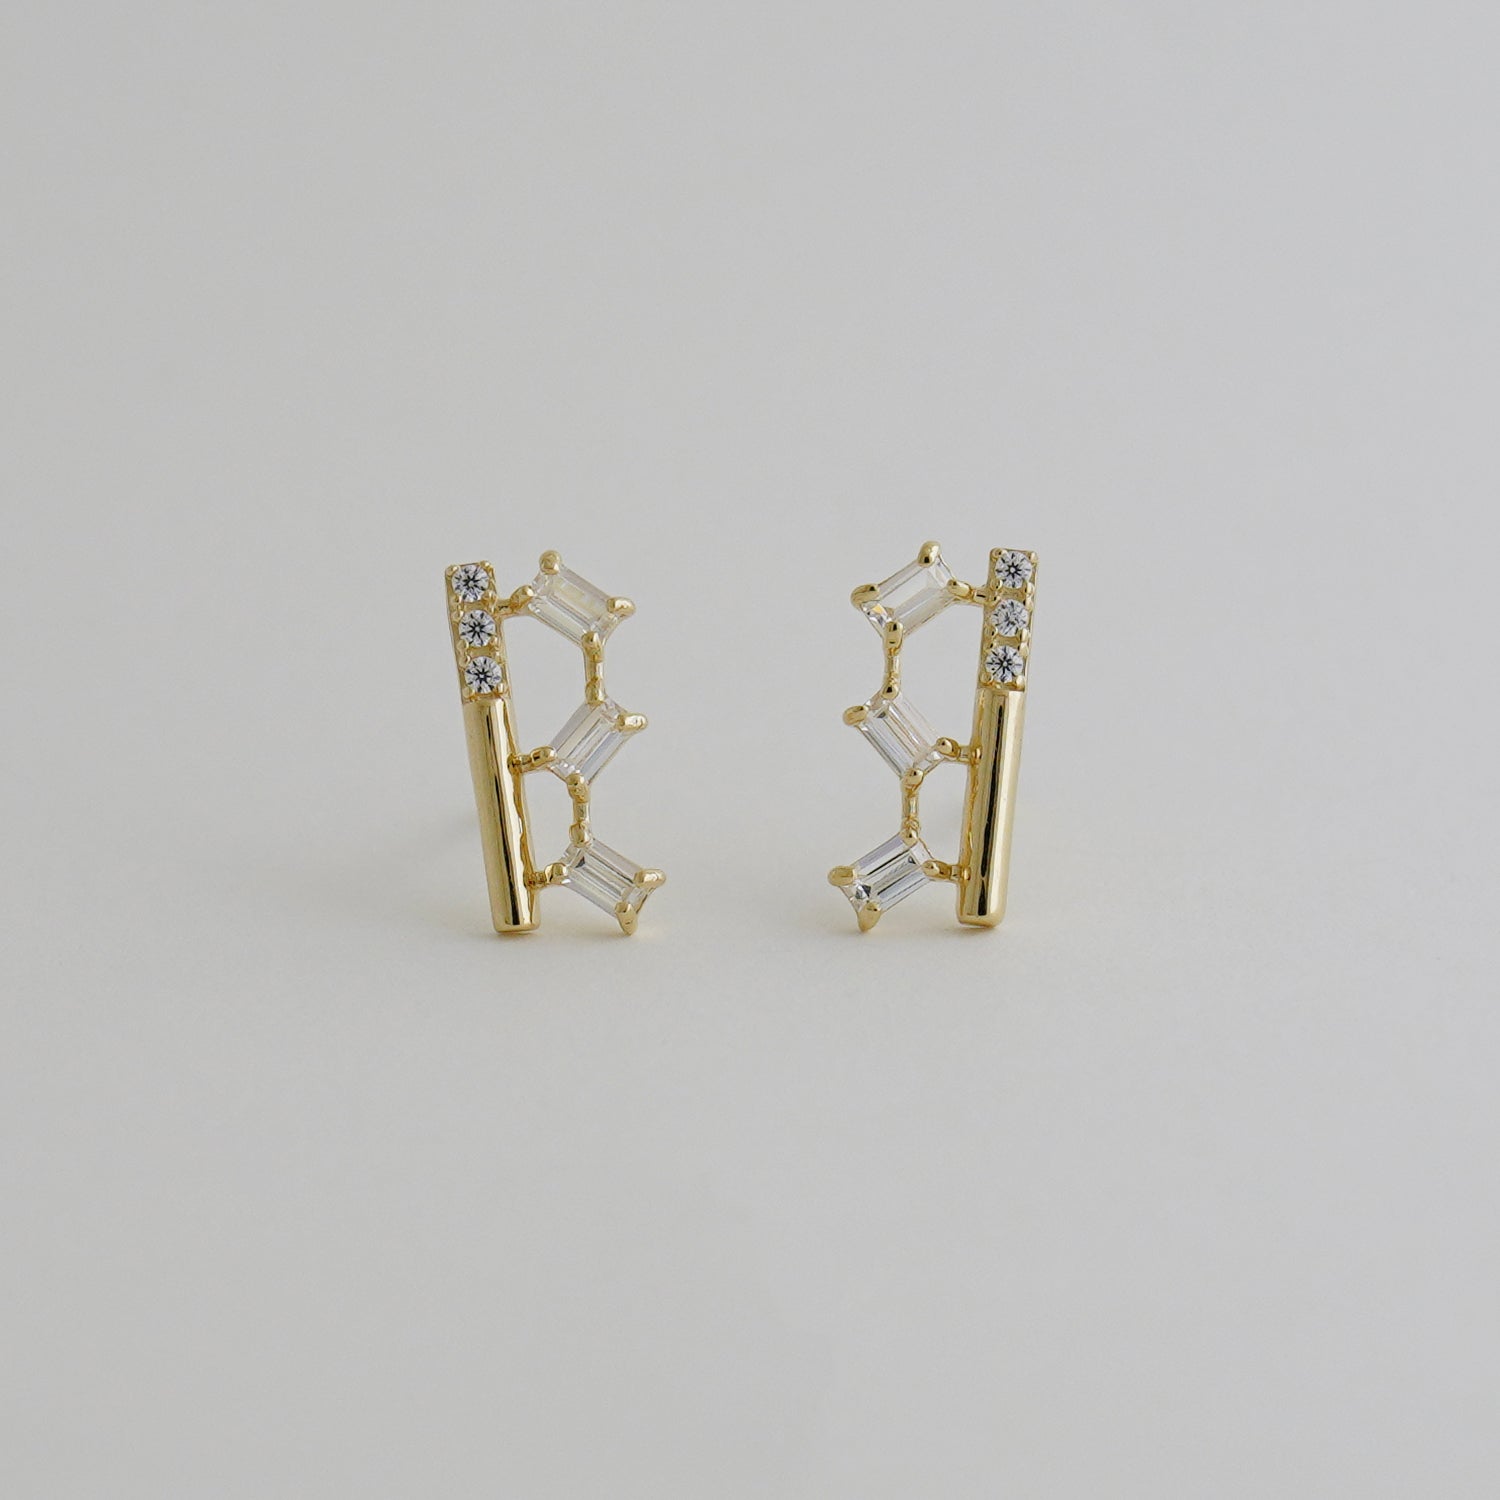 14K Solid Gold Straight Baguette CZ Stud Earrings